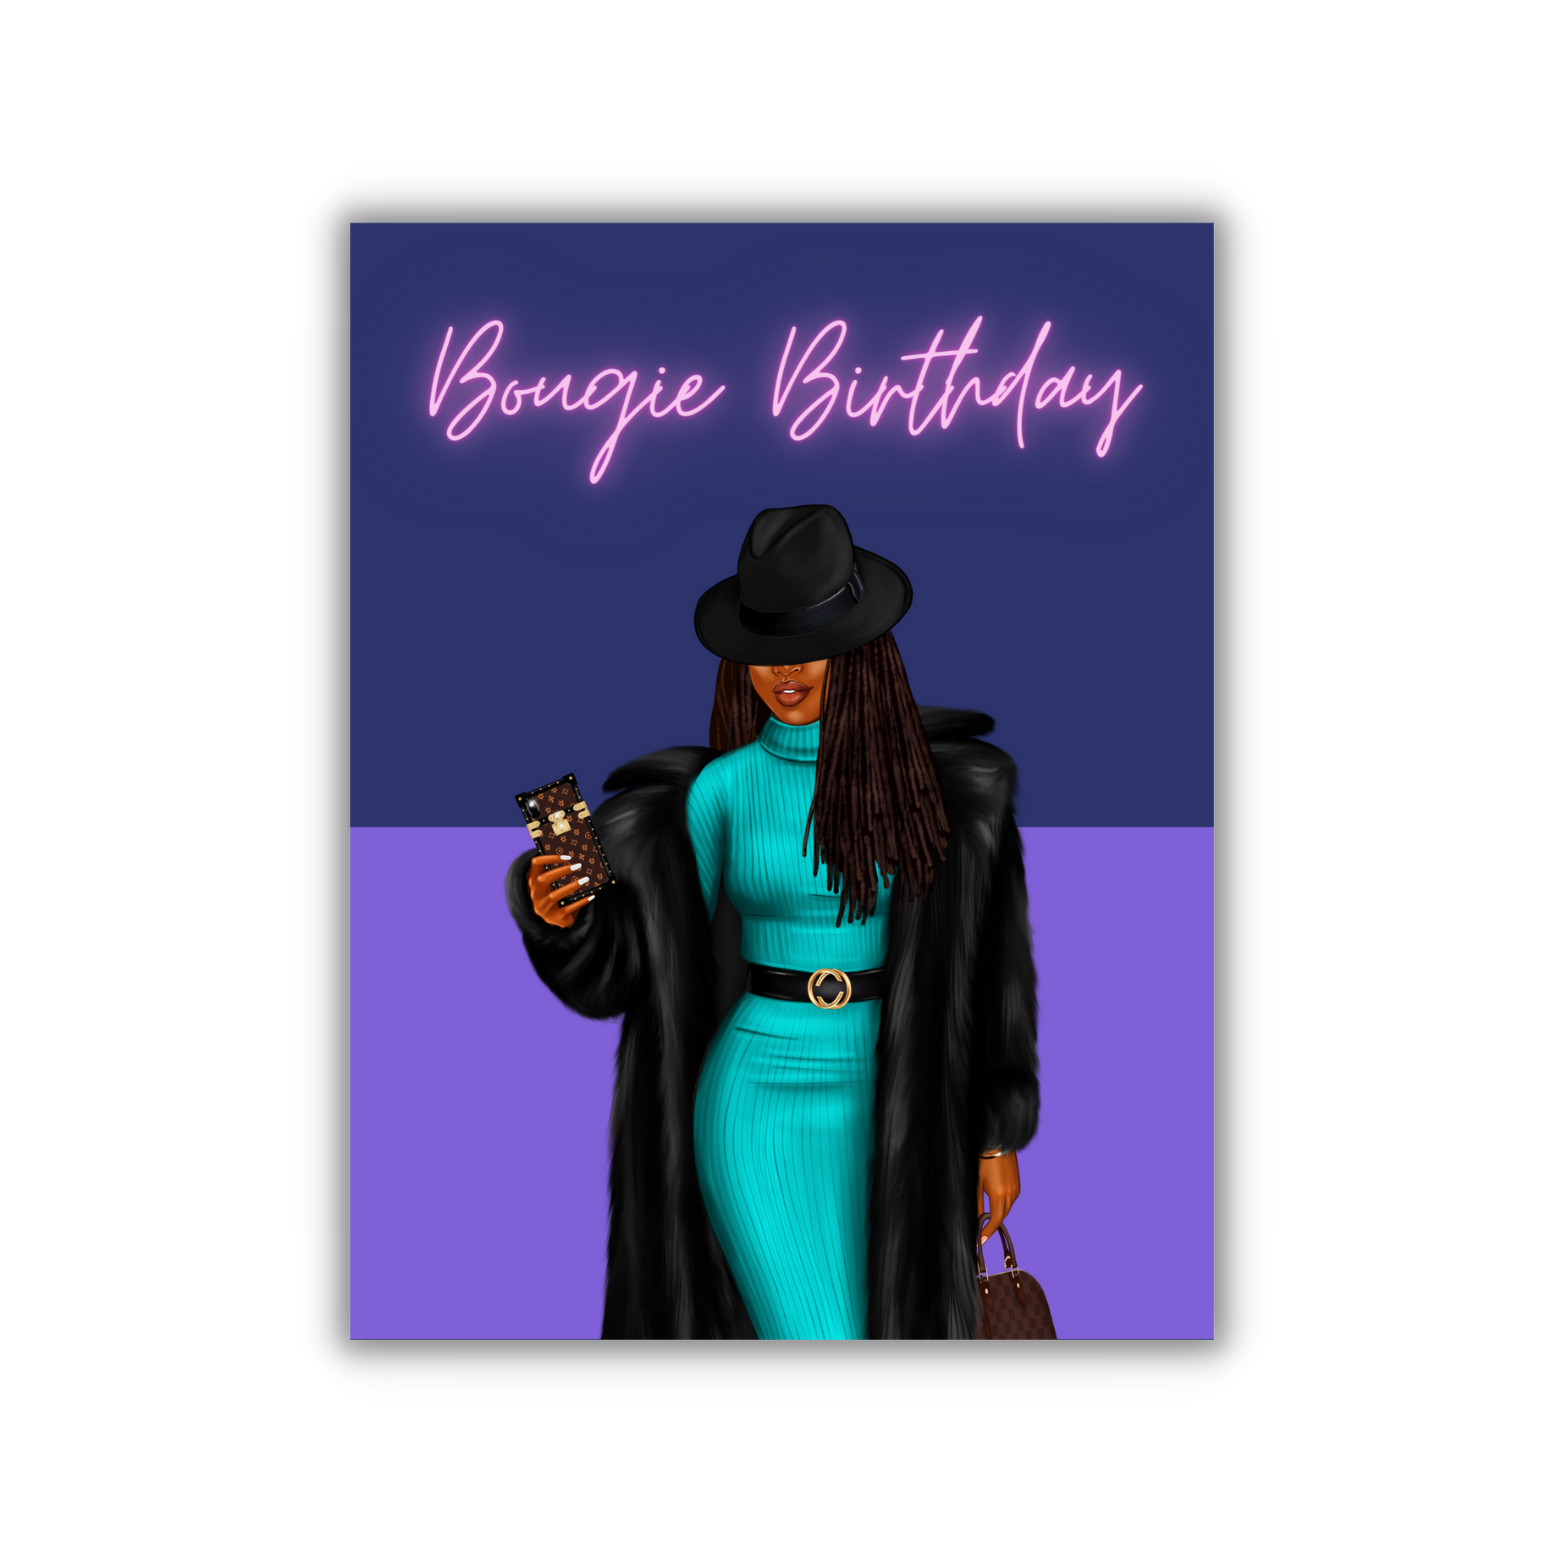 Bougie Birthday